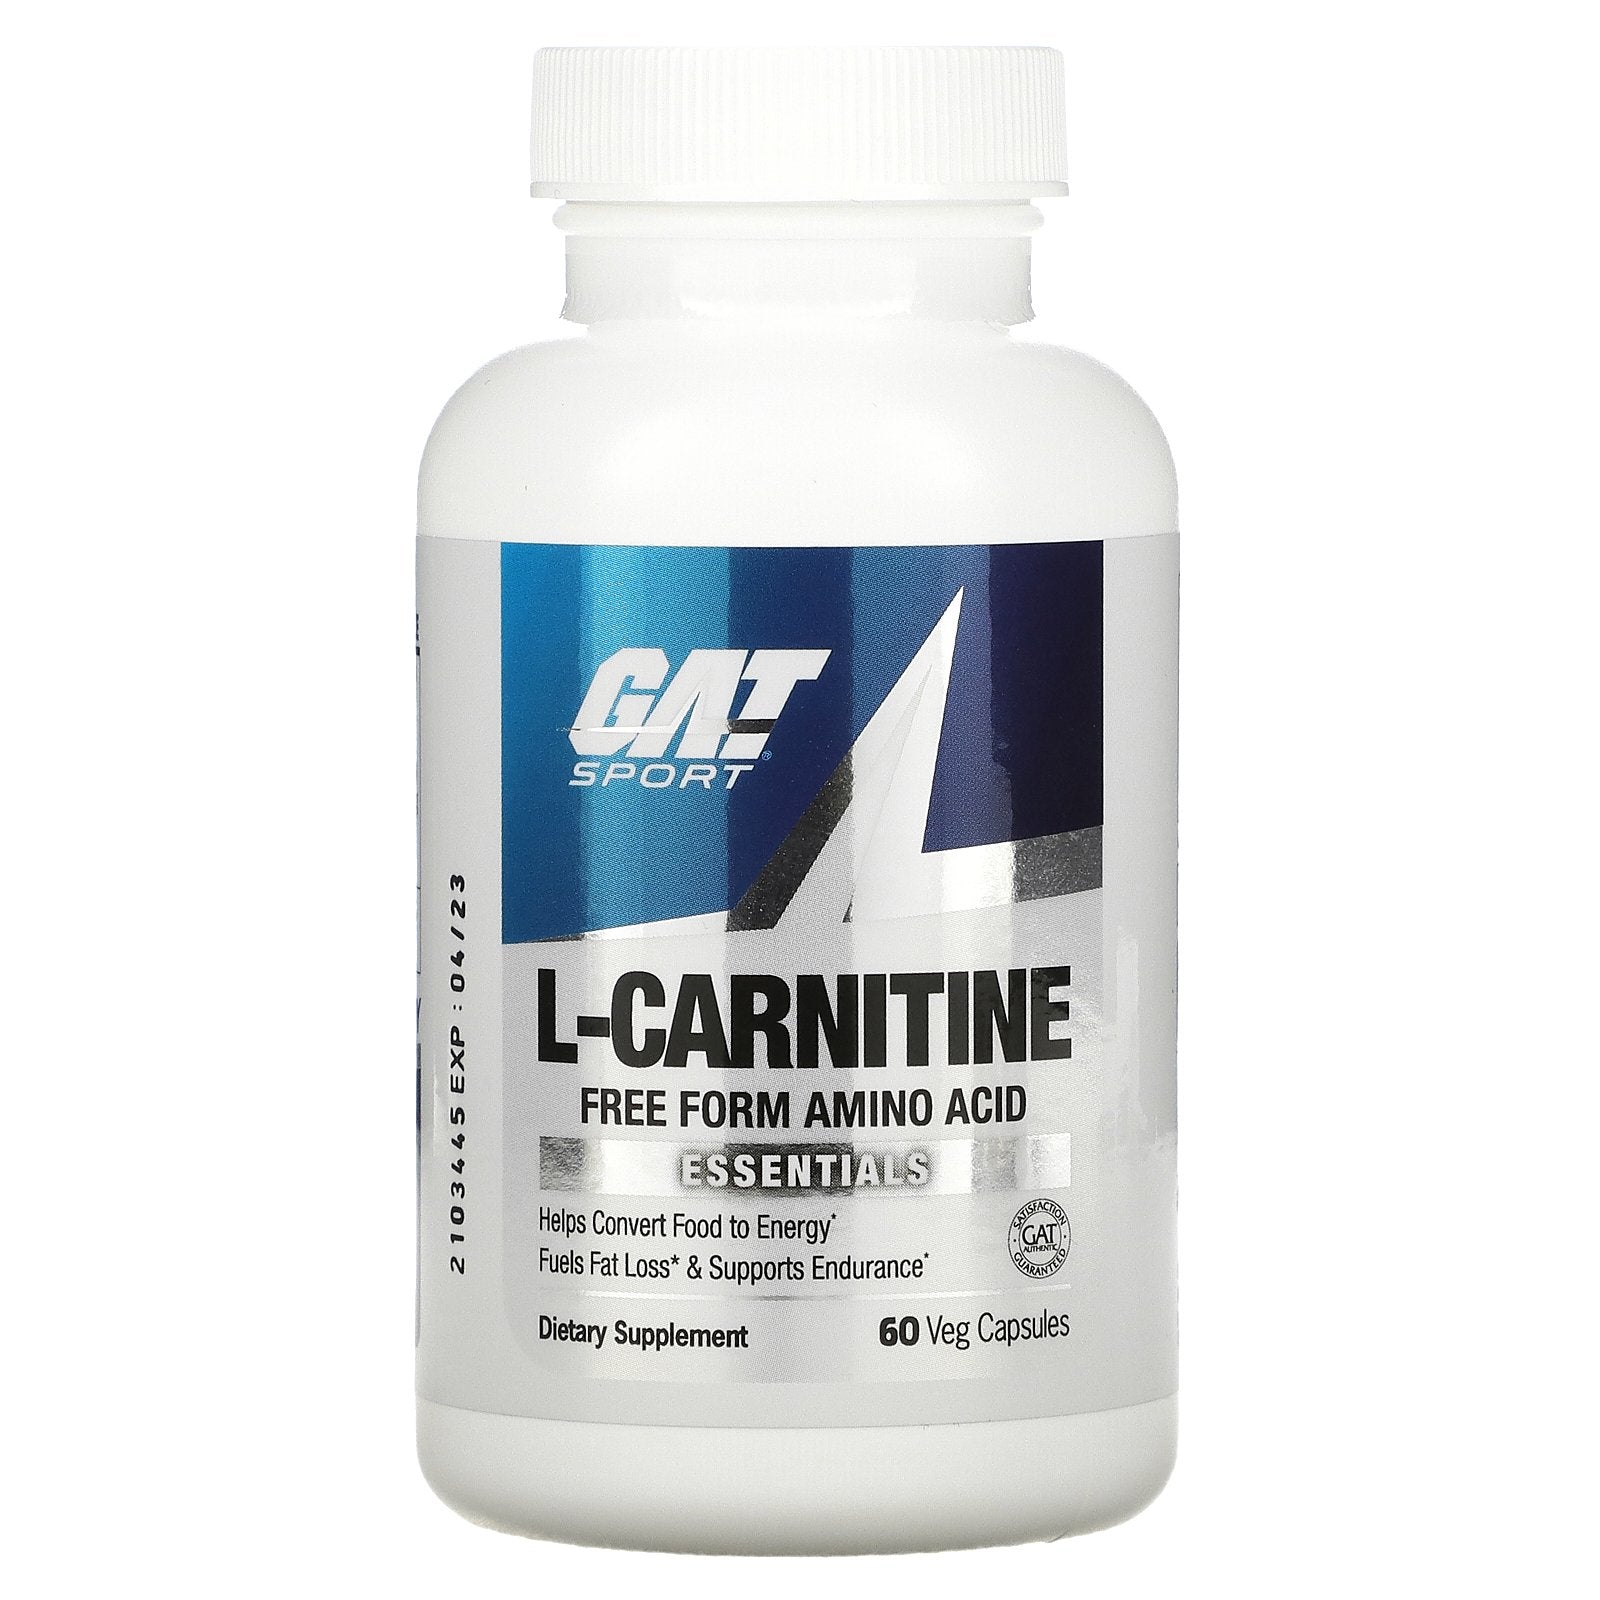 GAT, L-Carnitine, Amino Acid, Free Form